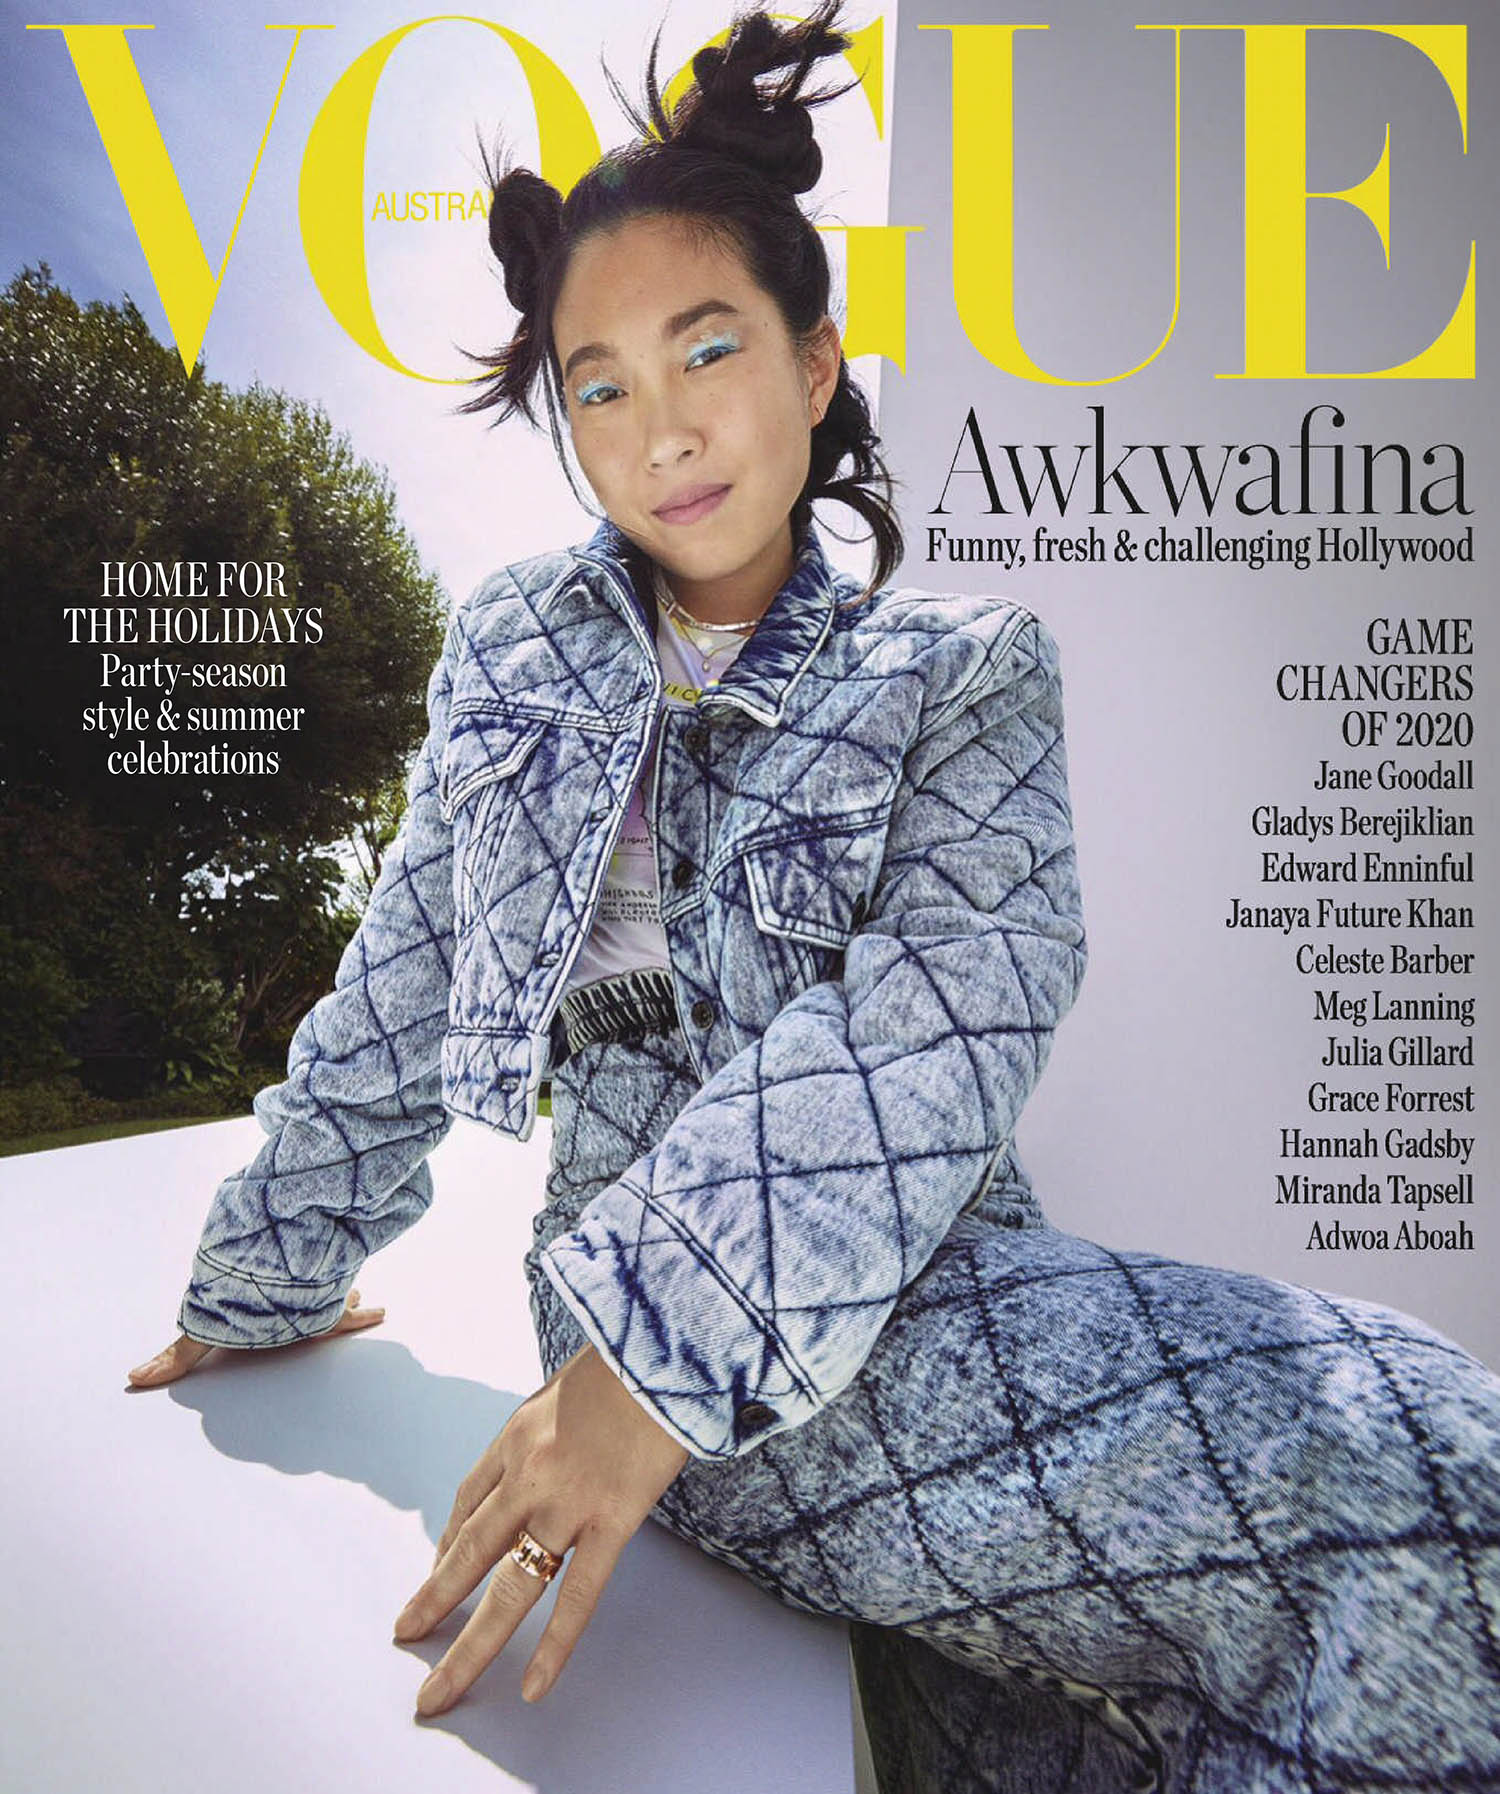 Awkwafina covers Vogue Australia December 2020 by Charles Dennington